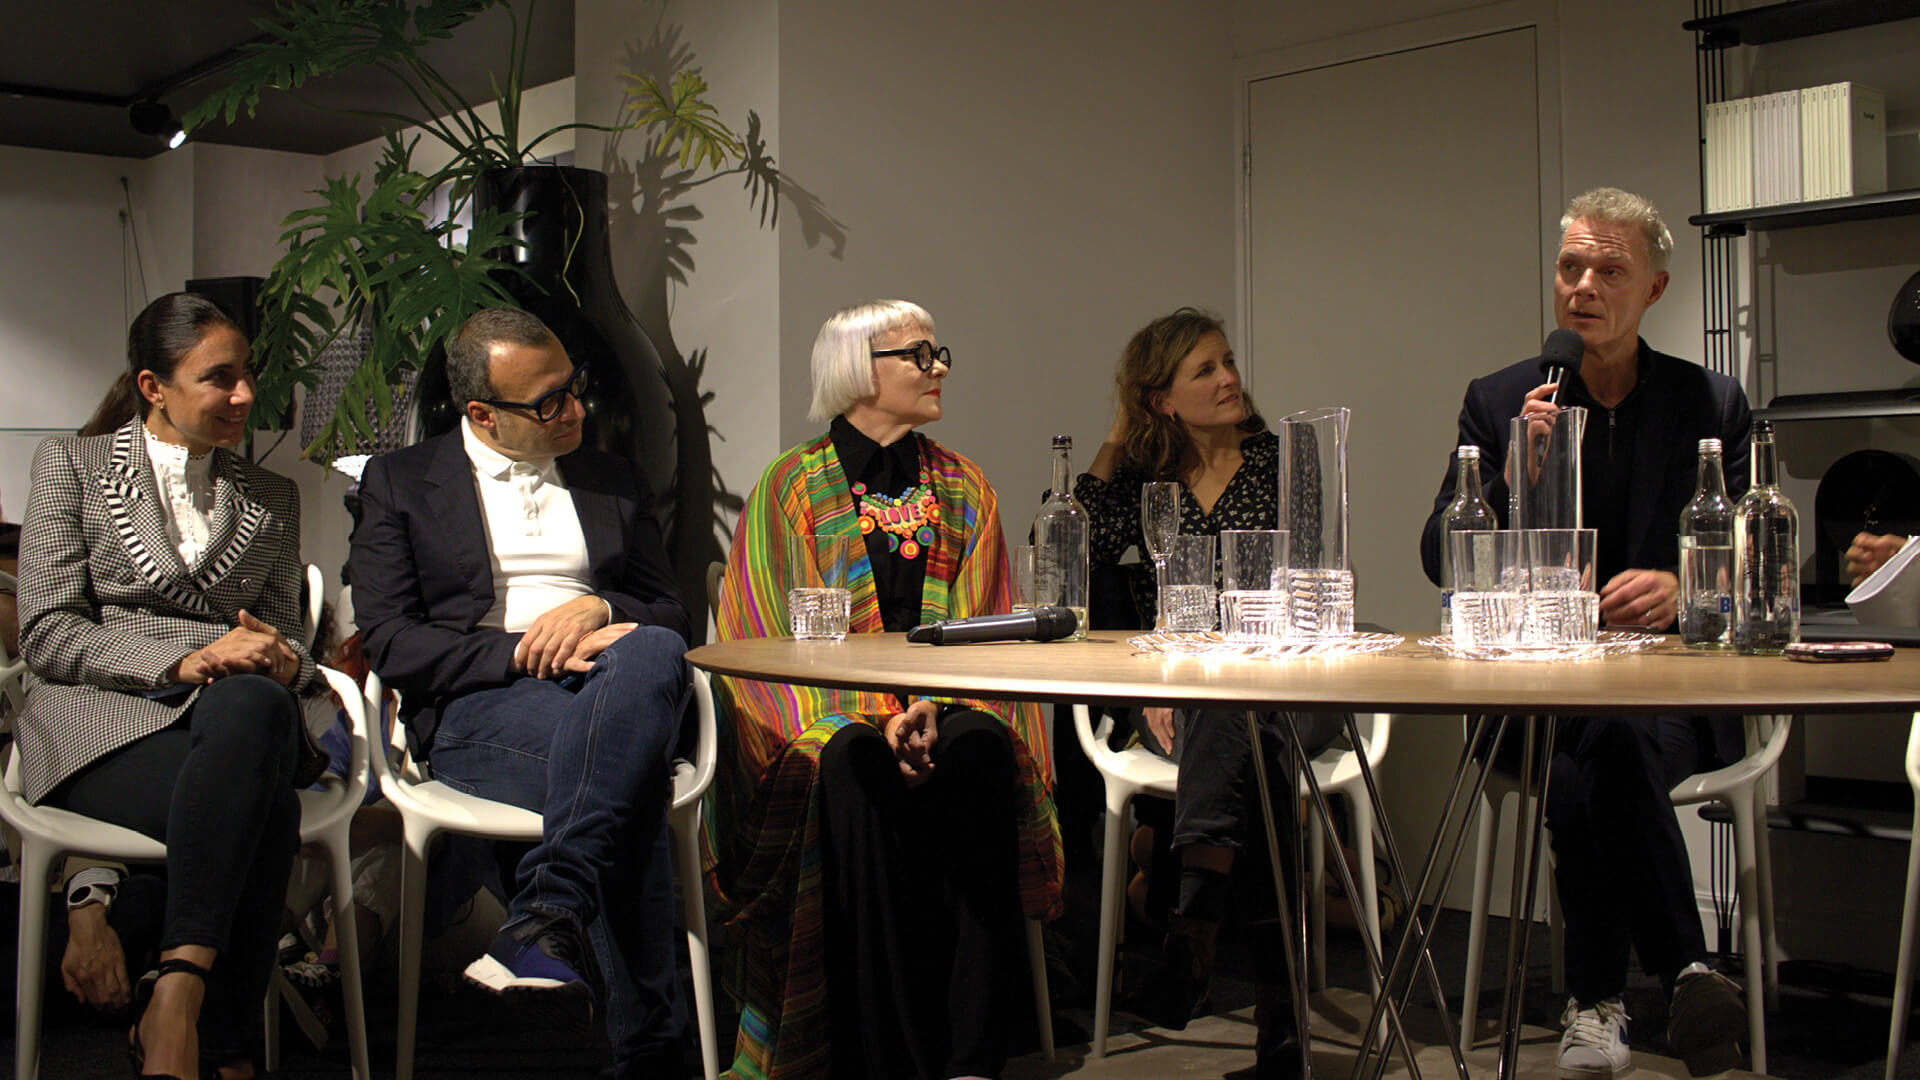 Five creators share their 'Art of Storytelling' at Kartell during London Design Festival